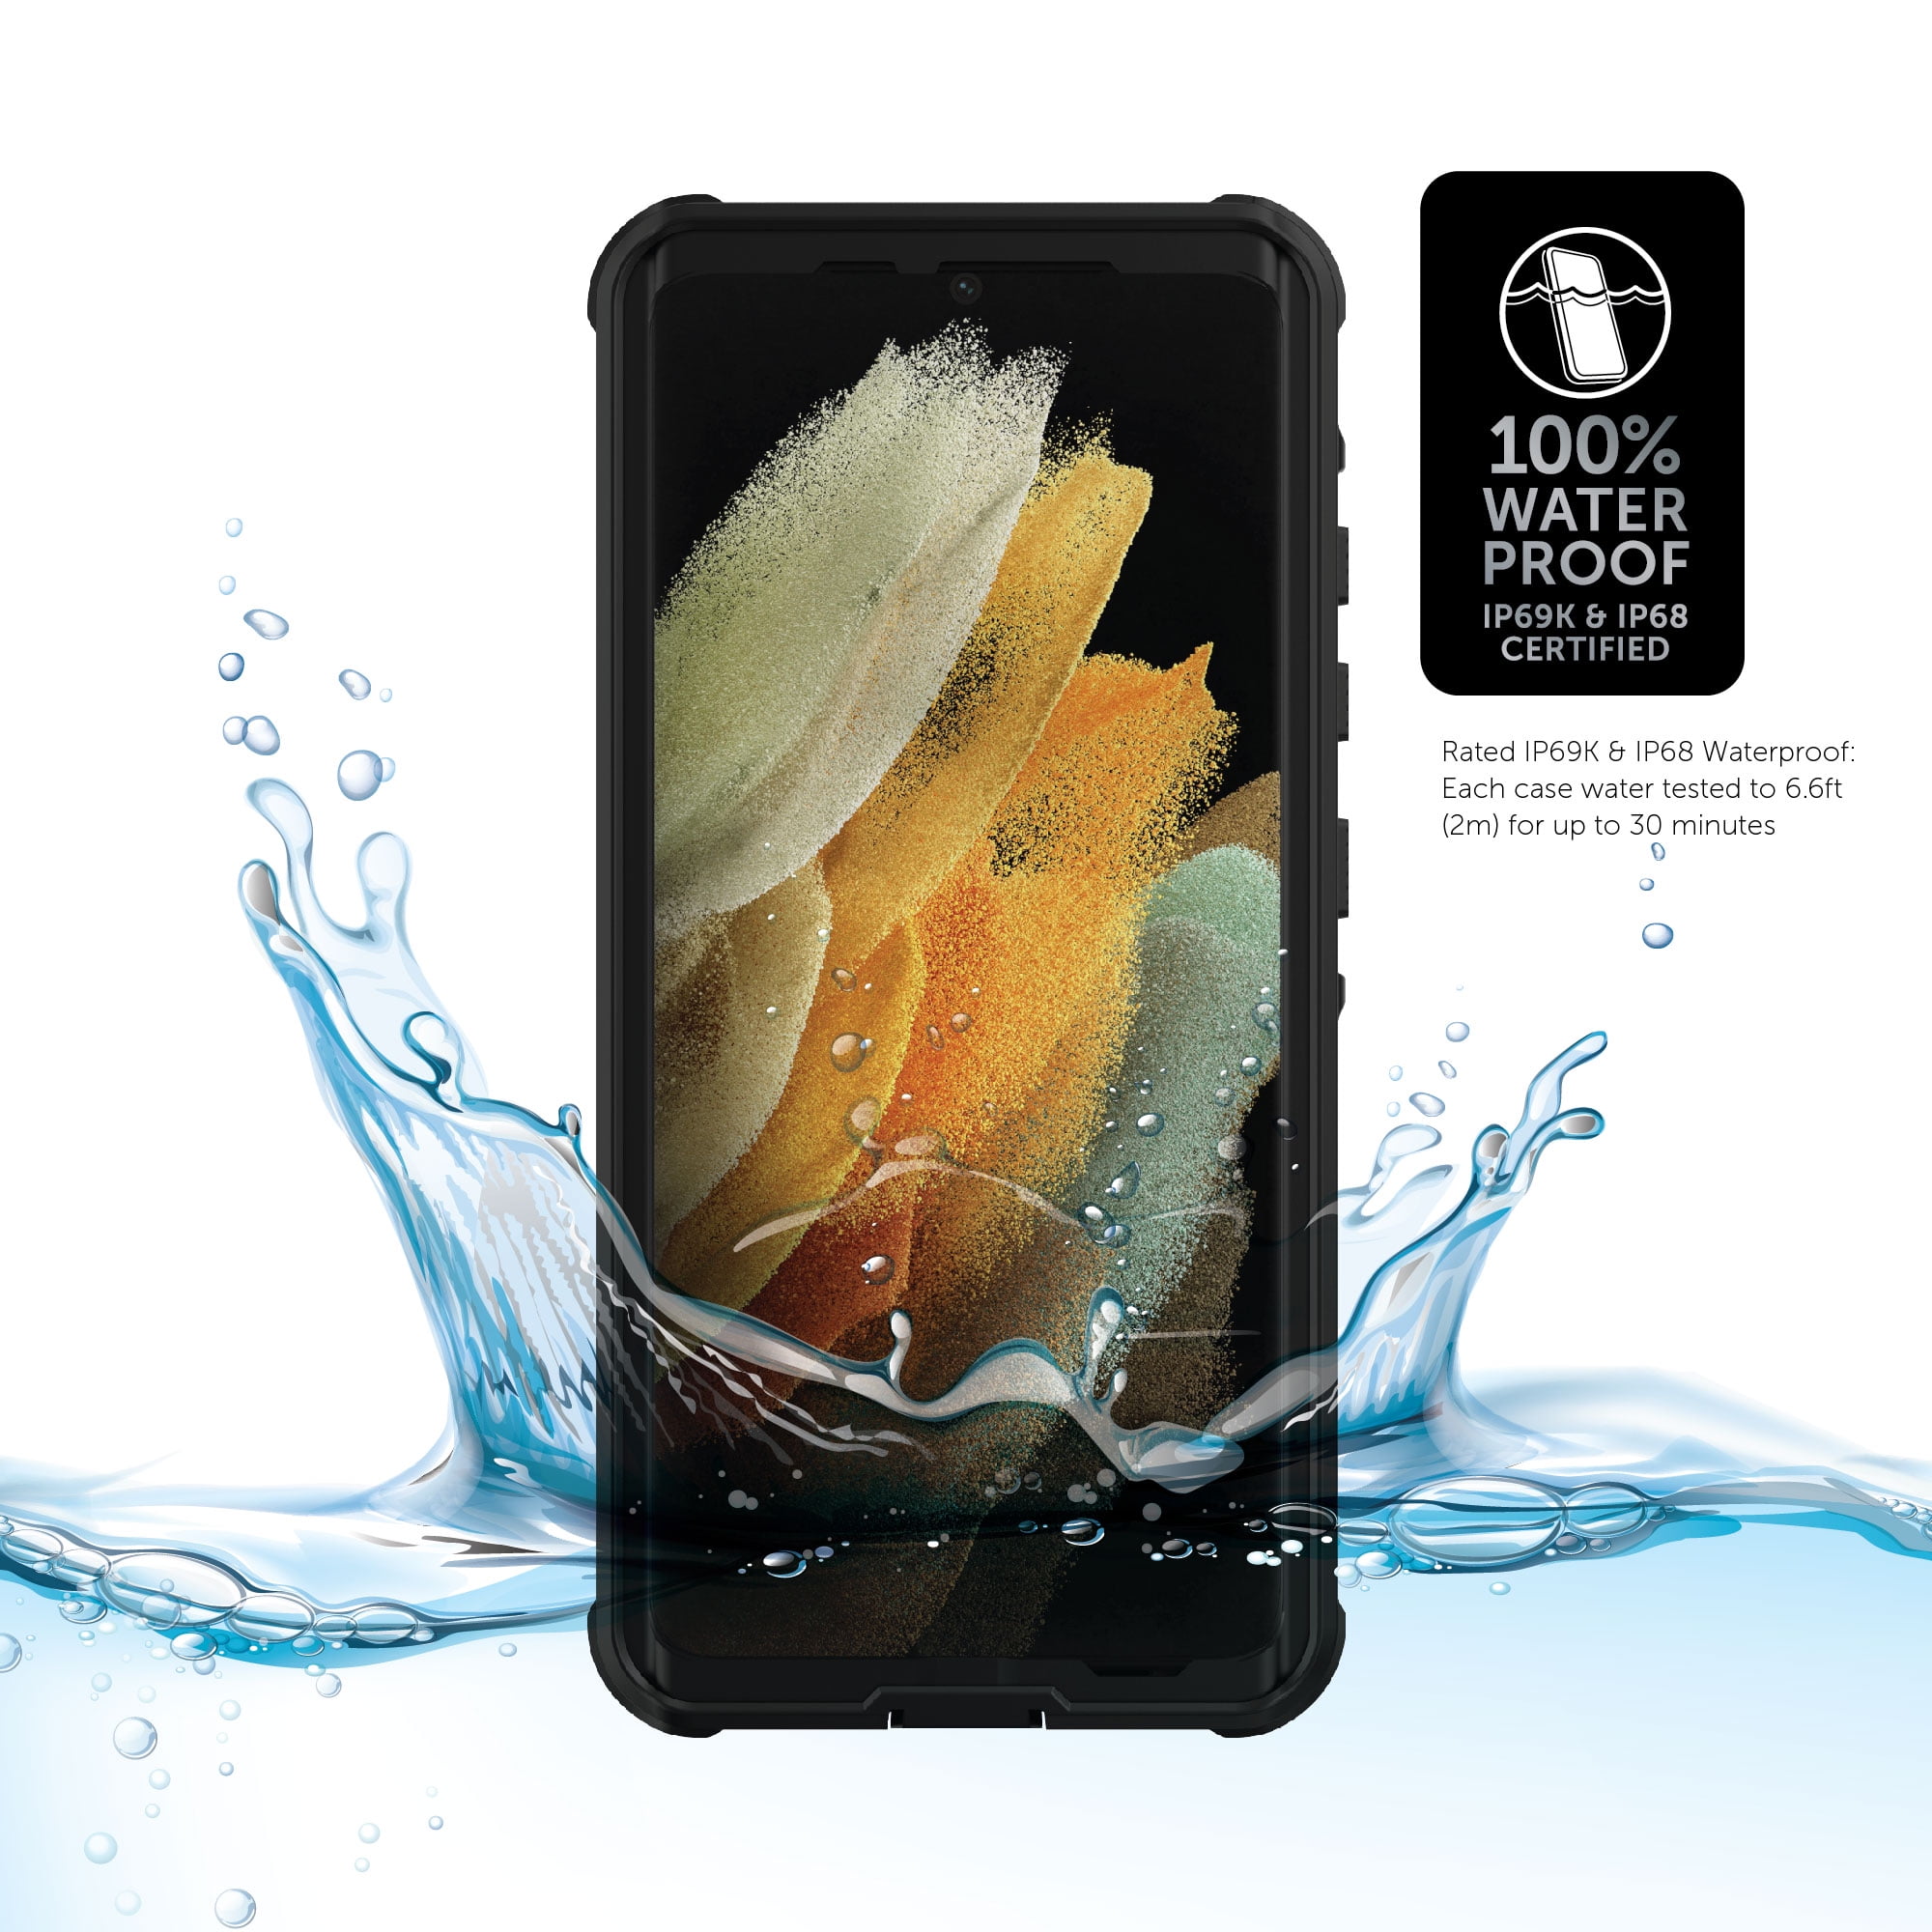 Samsung Galaxy S21 Ultra 5G Body Glove Tidal Waterproof Phone Case, Clear/Black